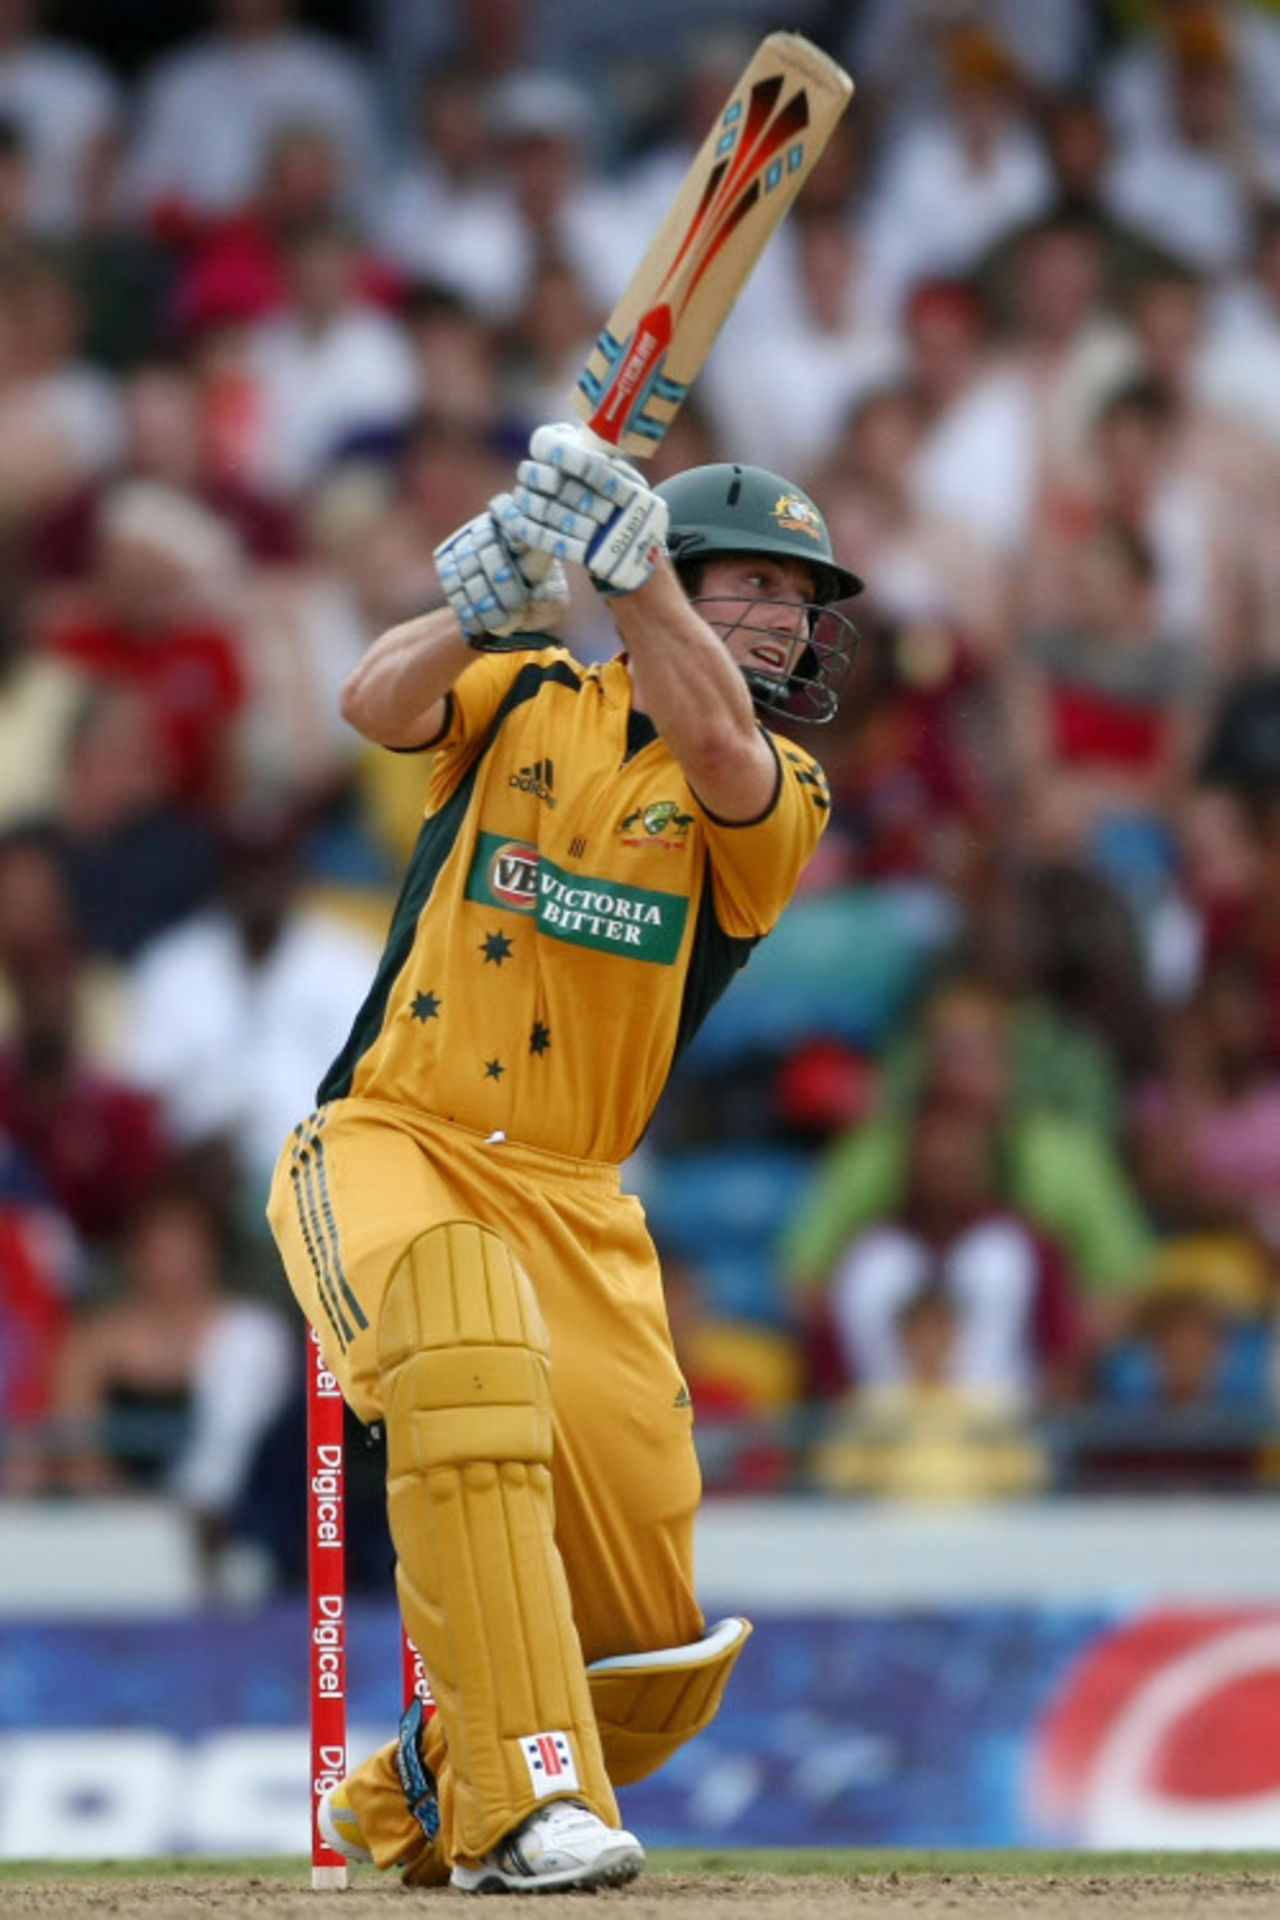 Shaun Marsh bats during his Twenty20 debut, West Indies v Australia, Twenty20, Barbados, June 20, 2008